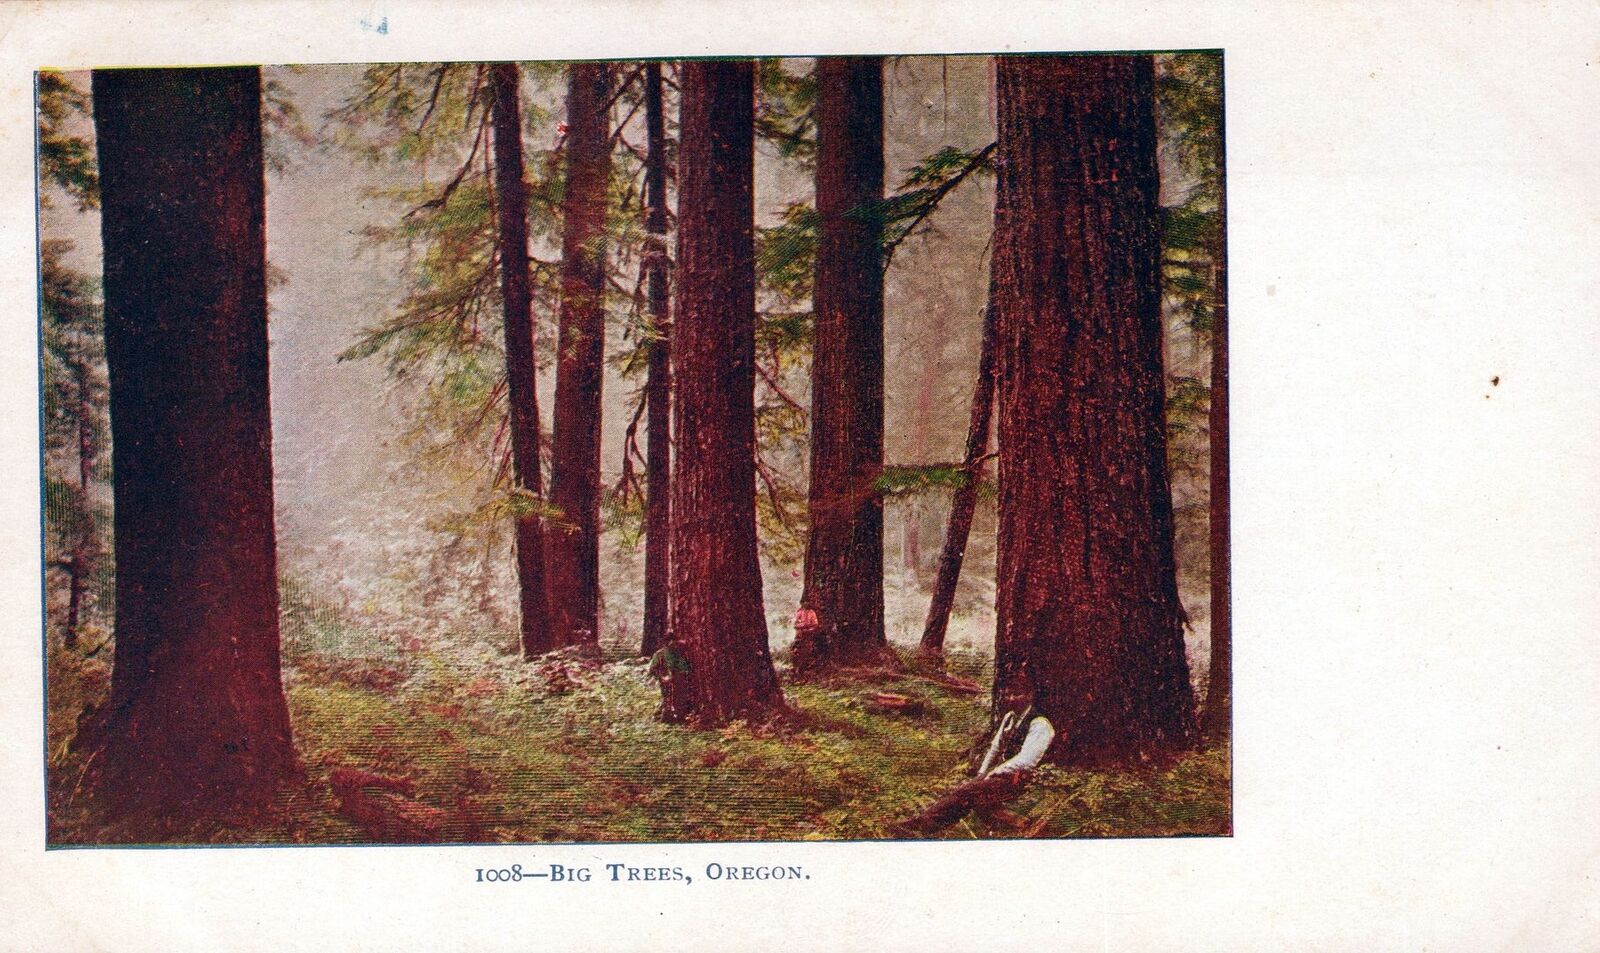 OREGON OR - Big Trees Postcard - udb (pre 1908)